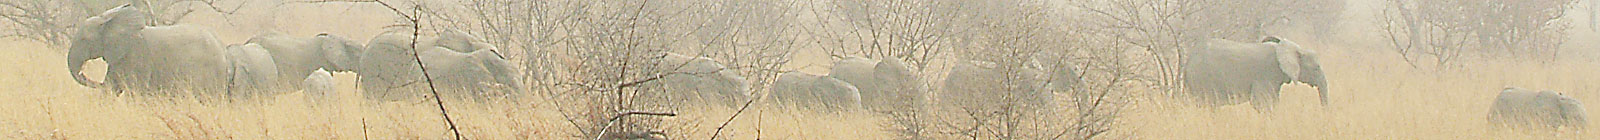 African Elephants in Arli National Park, Burkina Faso.